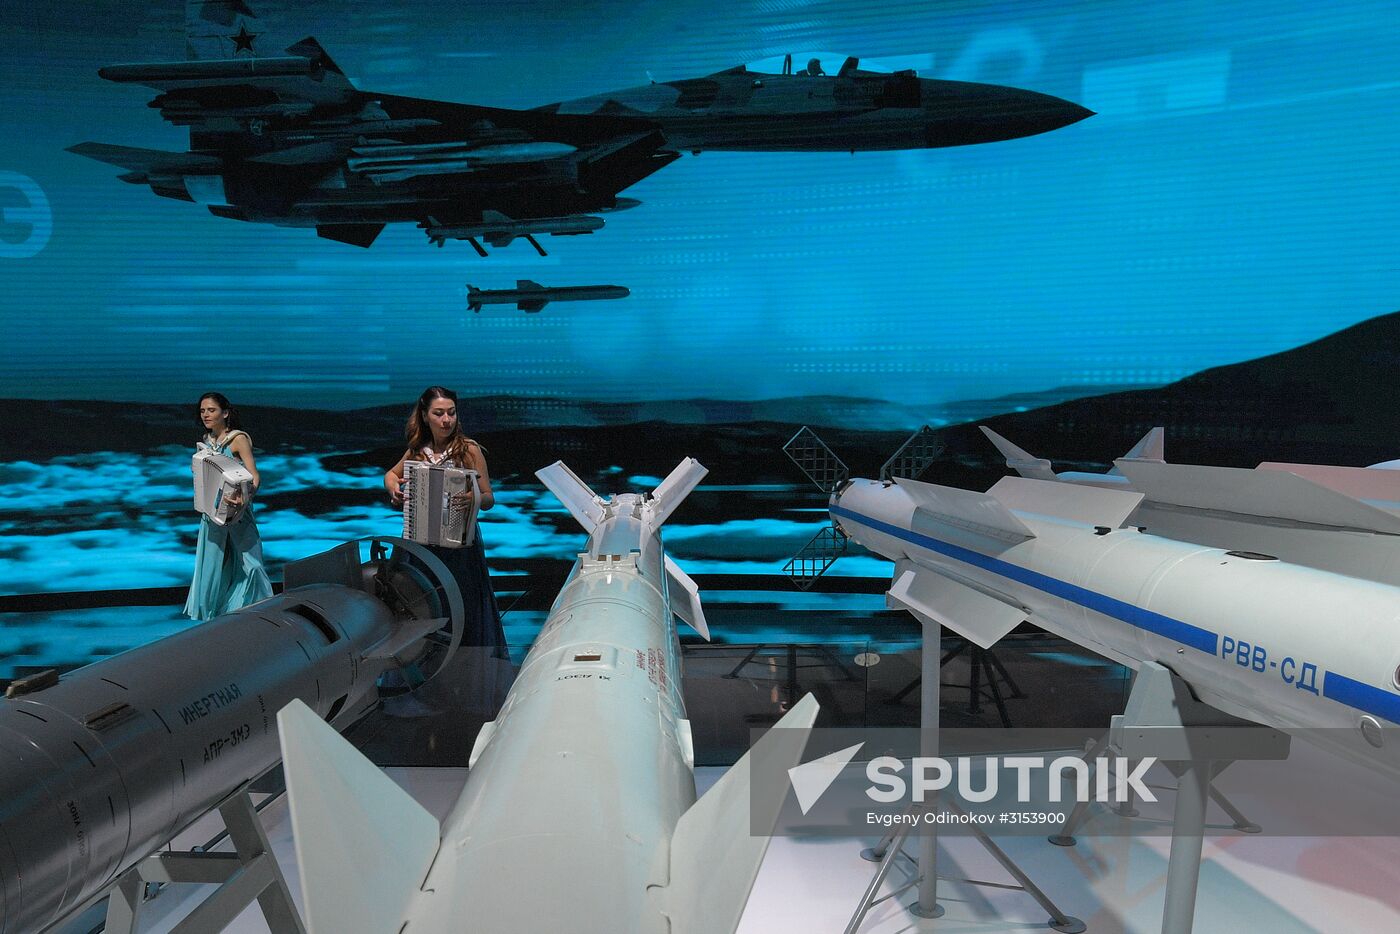 International Aviation and Space Salon MAKS-2017 opens in Zhukovsky